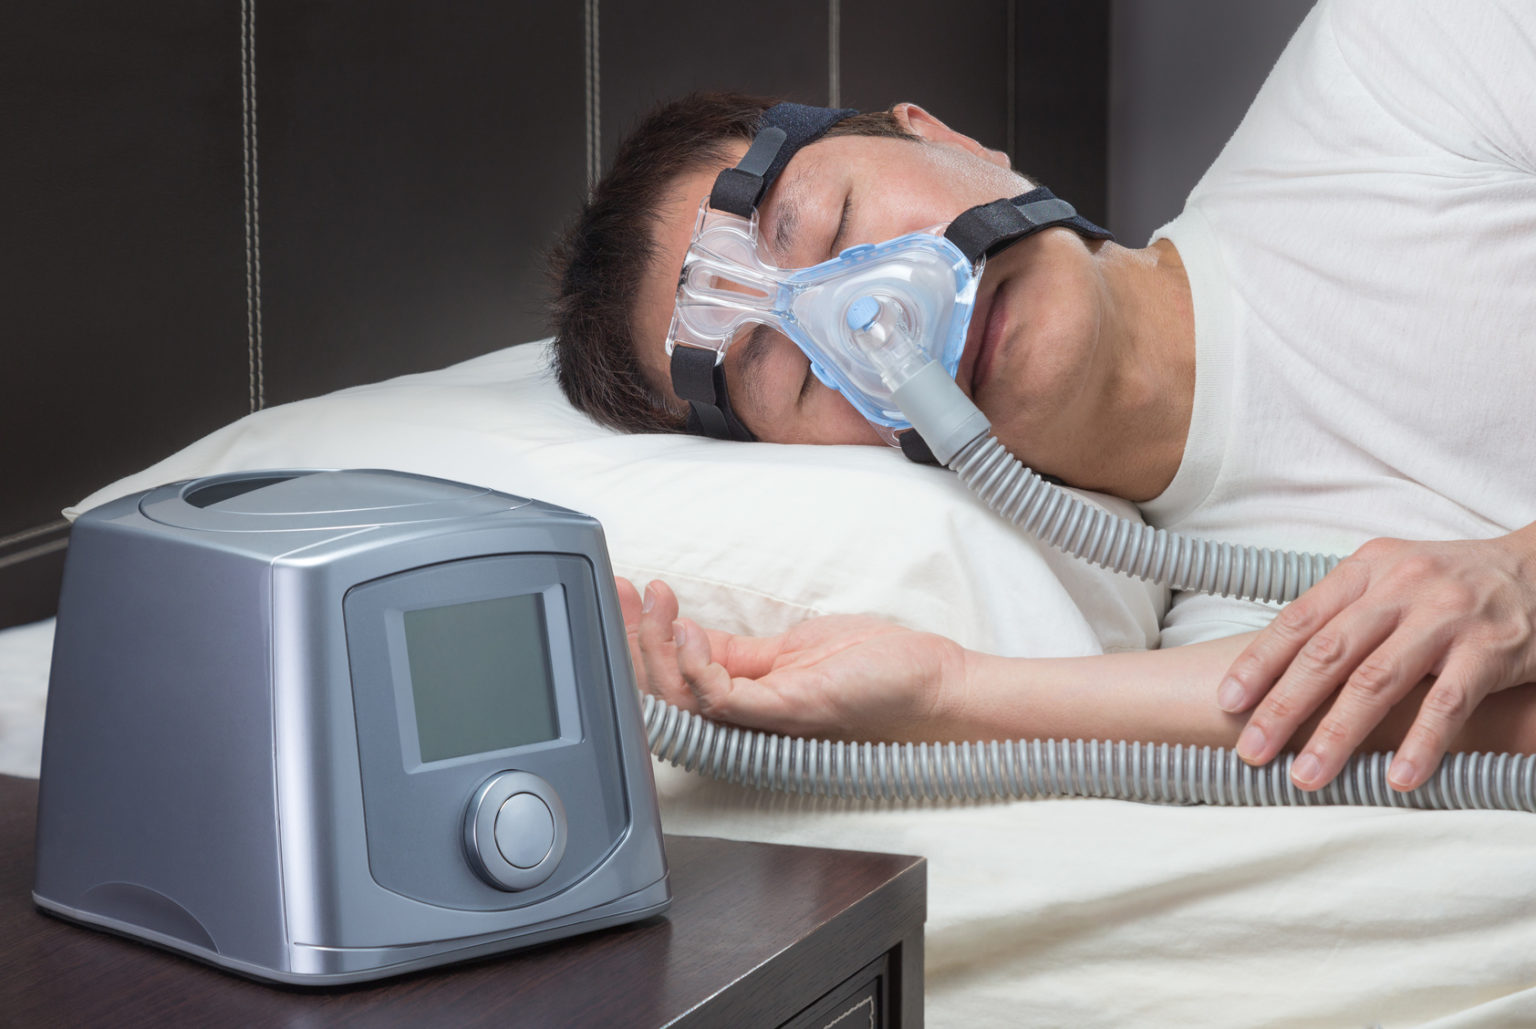 travel sleep apnea machine uk